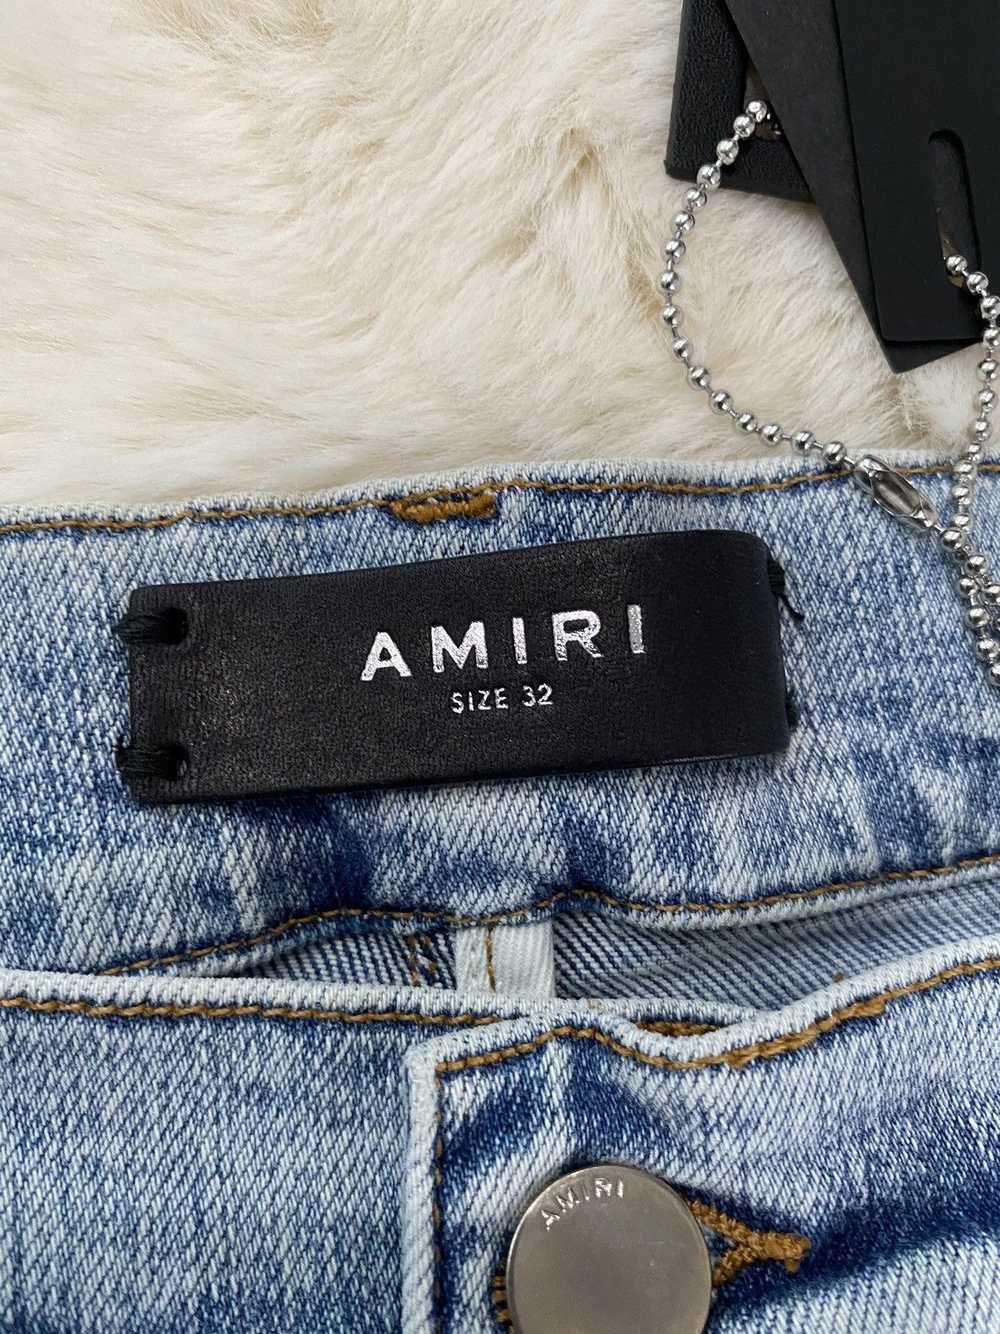 Amiri Amiri Sky Indigo White Bandana MX1 Jeans - image 2